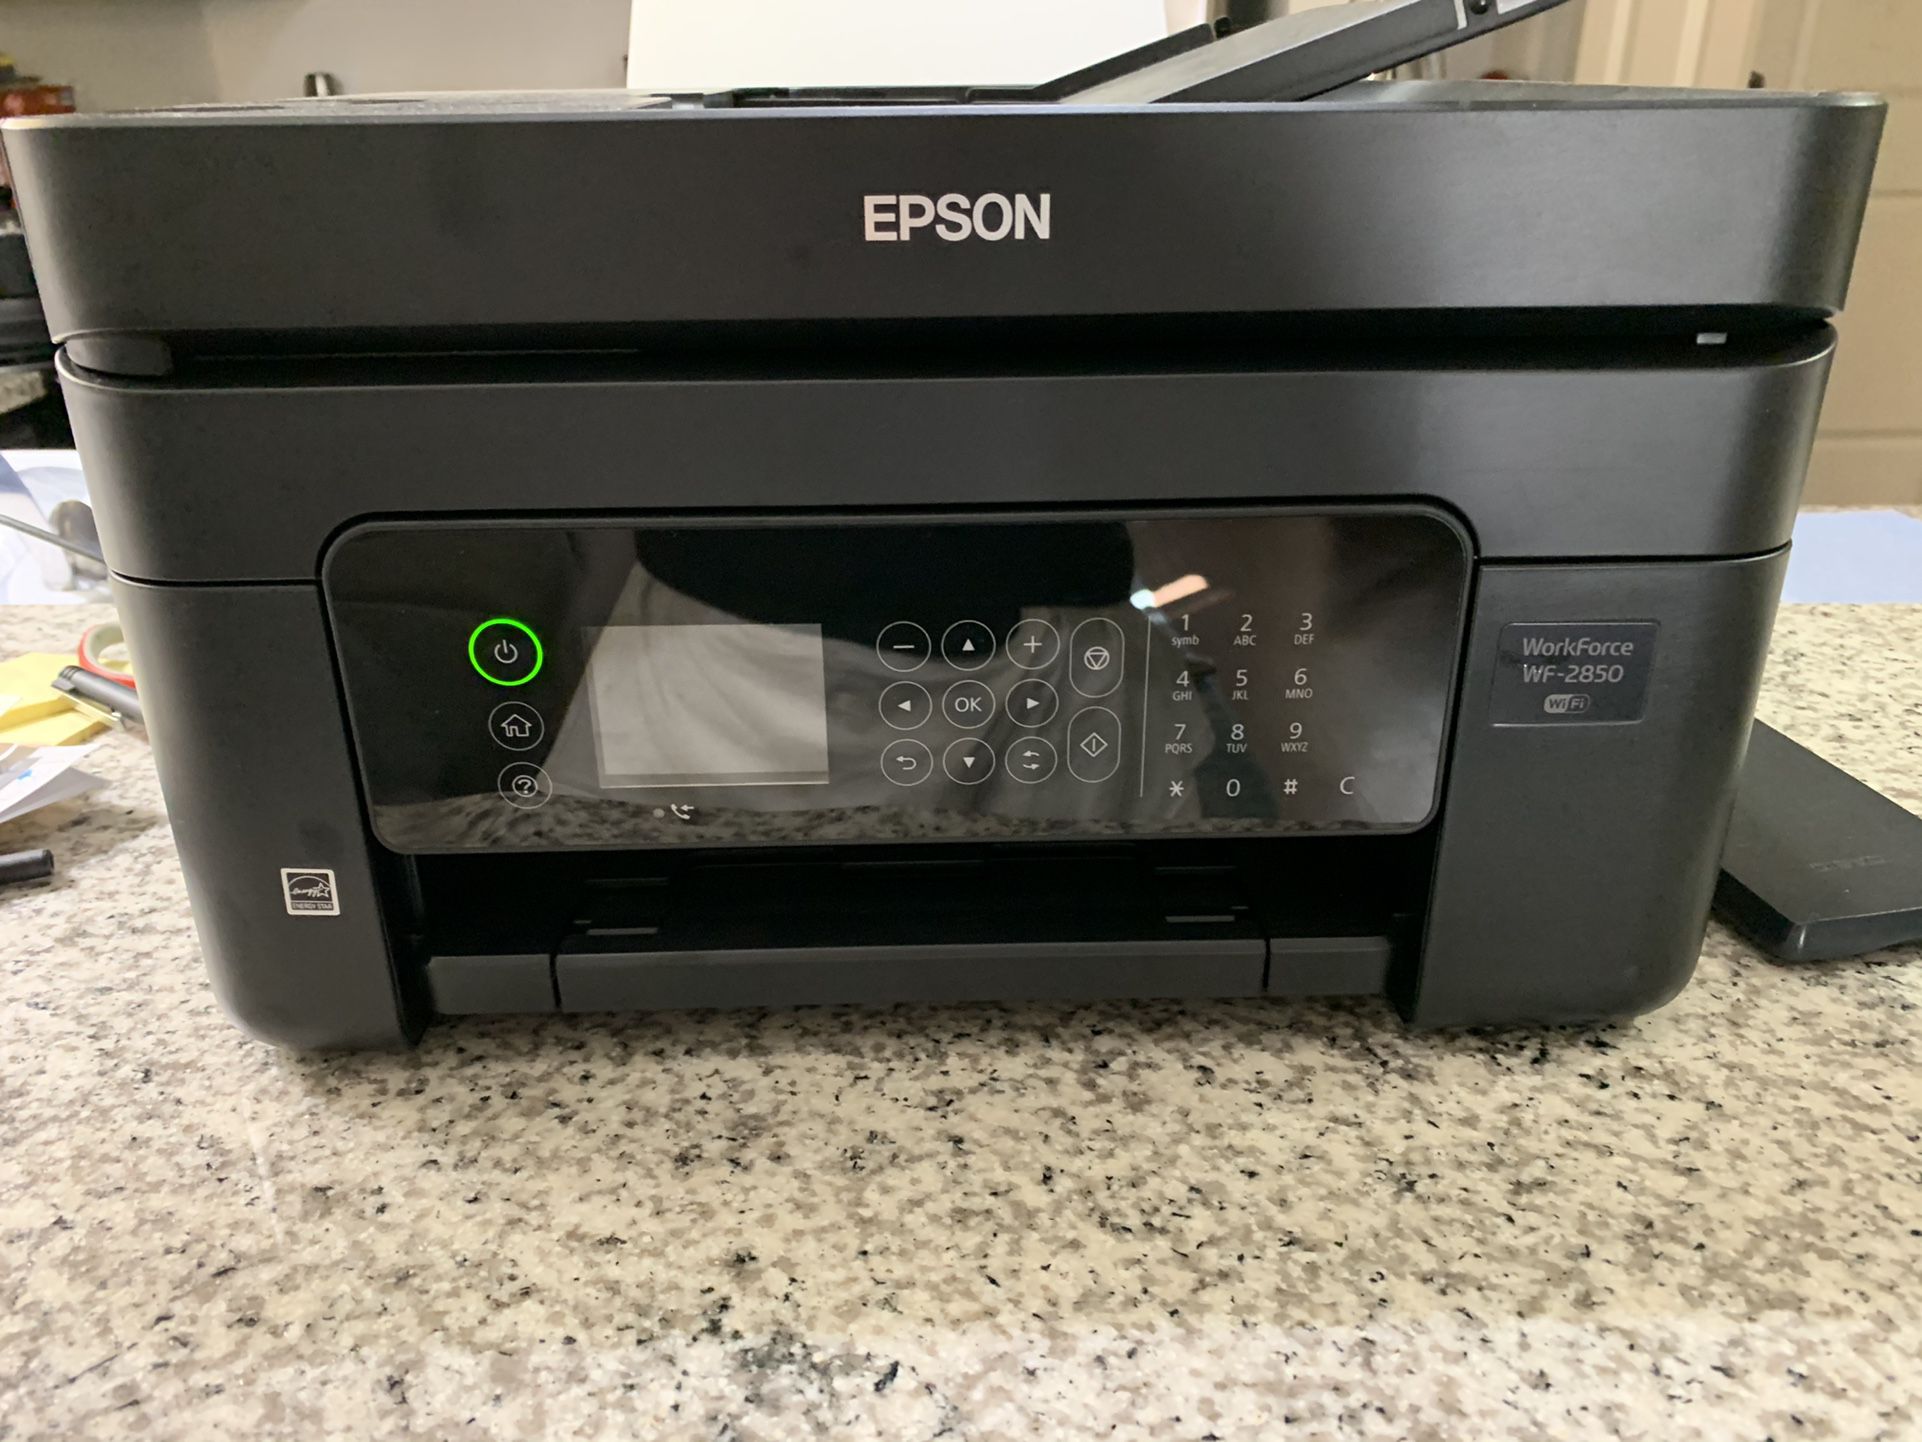 Lightly used Epson printer/scanner/copier